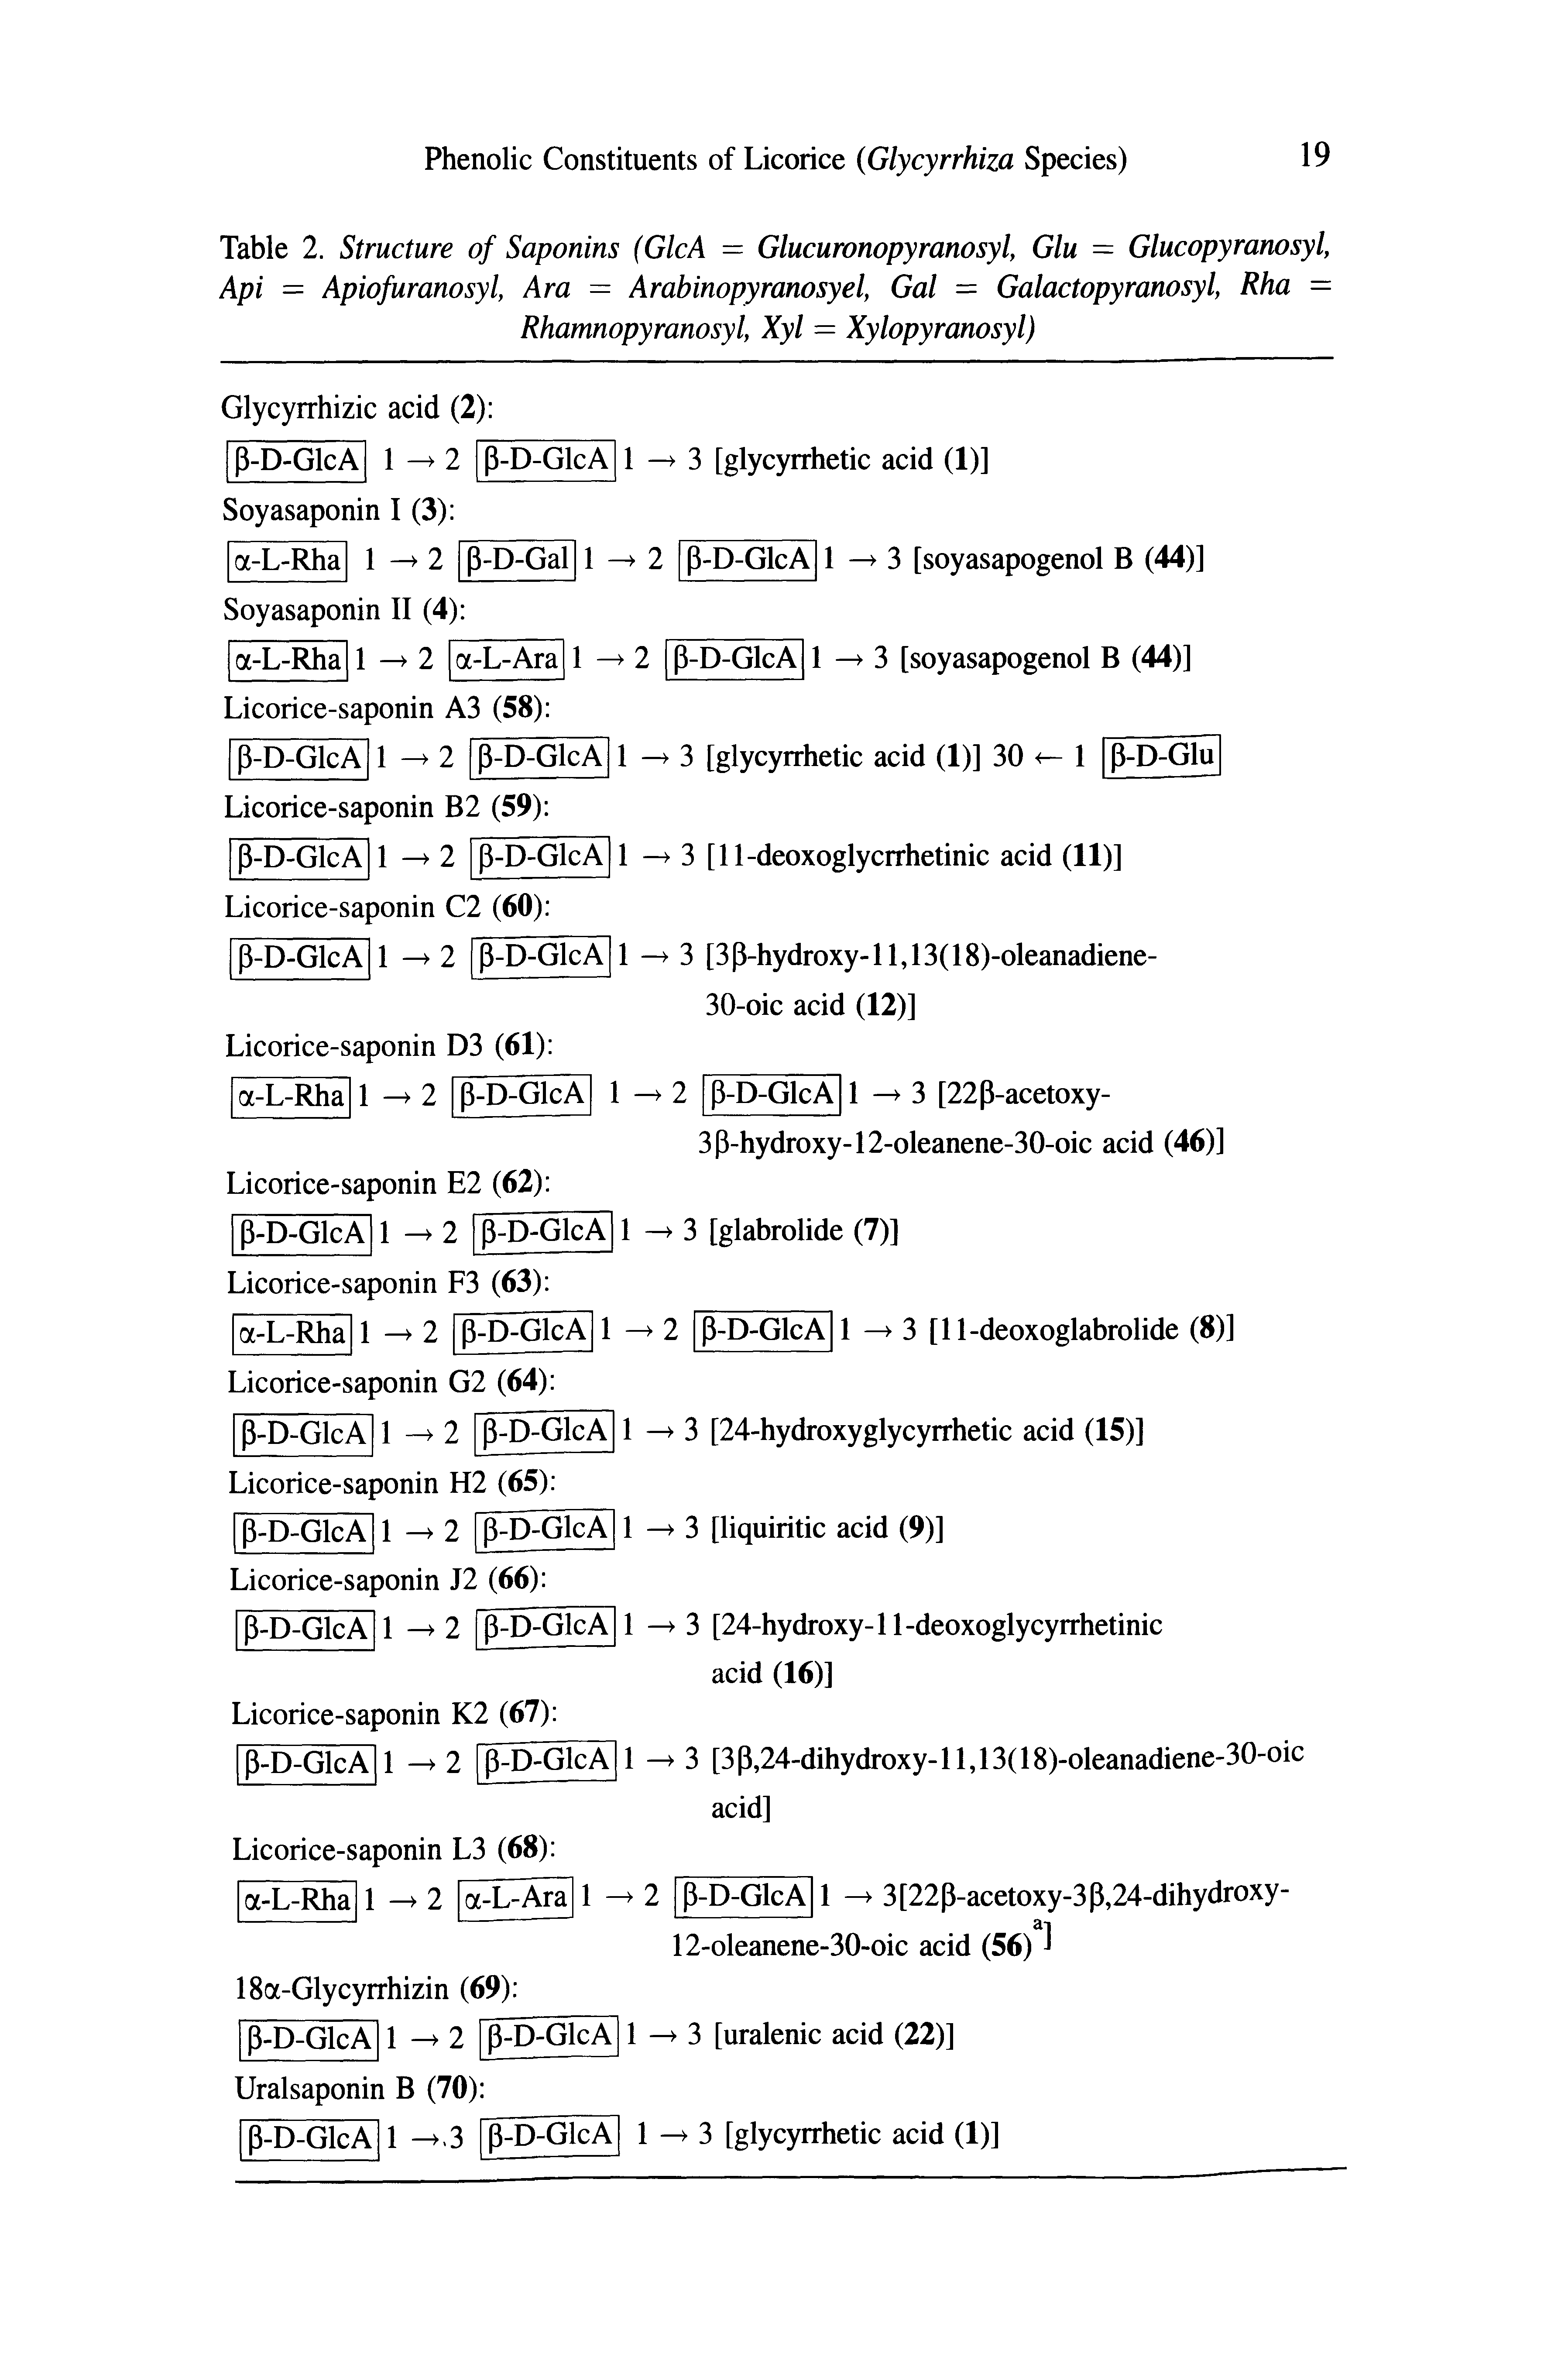 Table 2. Structure of Saponins (GlcA = Glucuronopyranosyl, Glu = Glucopyranosyl, Api = Apiofuranosyl, Ara = Arabinopyranosyel, Gal = Galactopyranosyl, Rha = Rhamnopyranosyl, Xyl = Xylopyranosyl)...